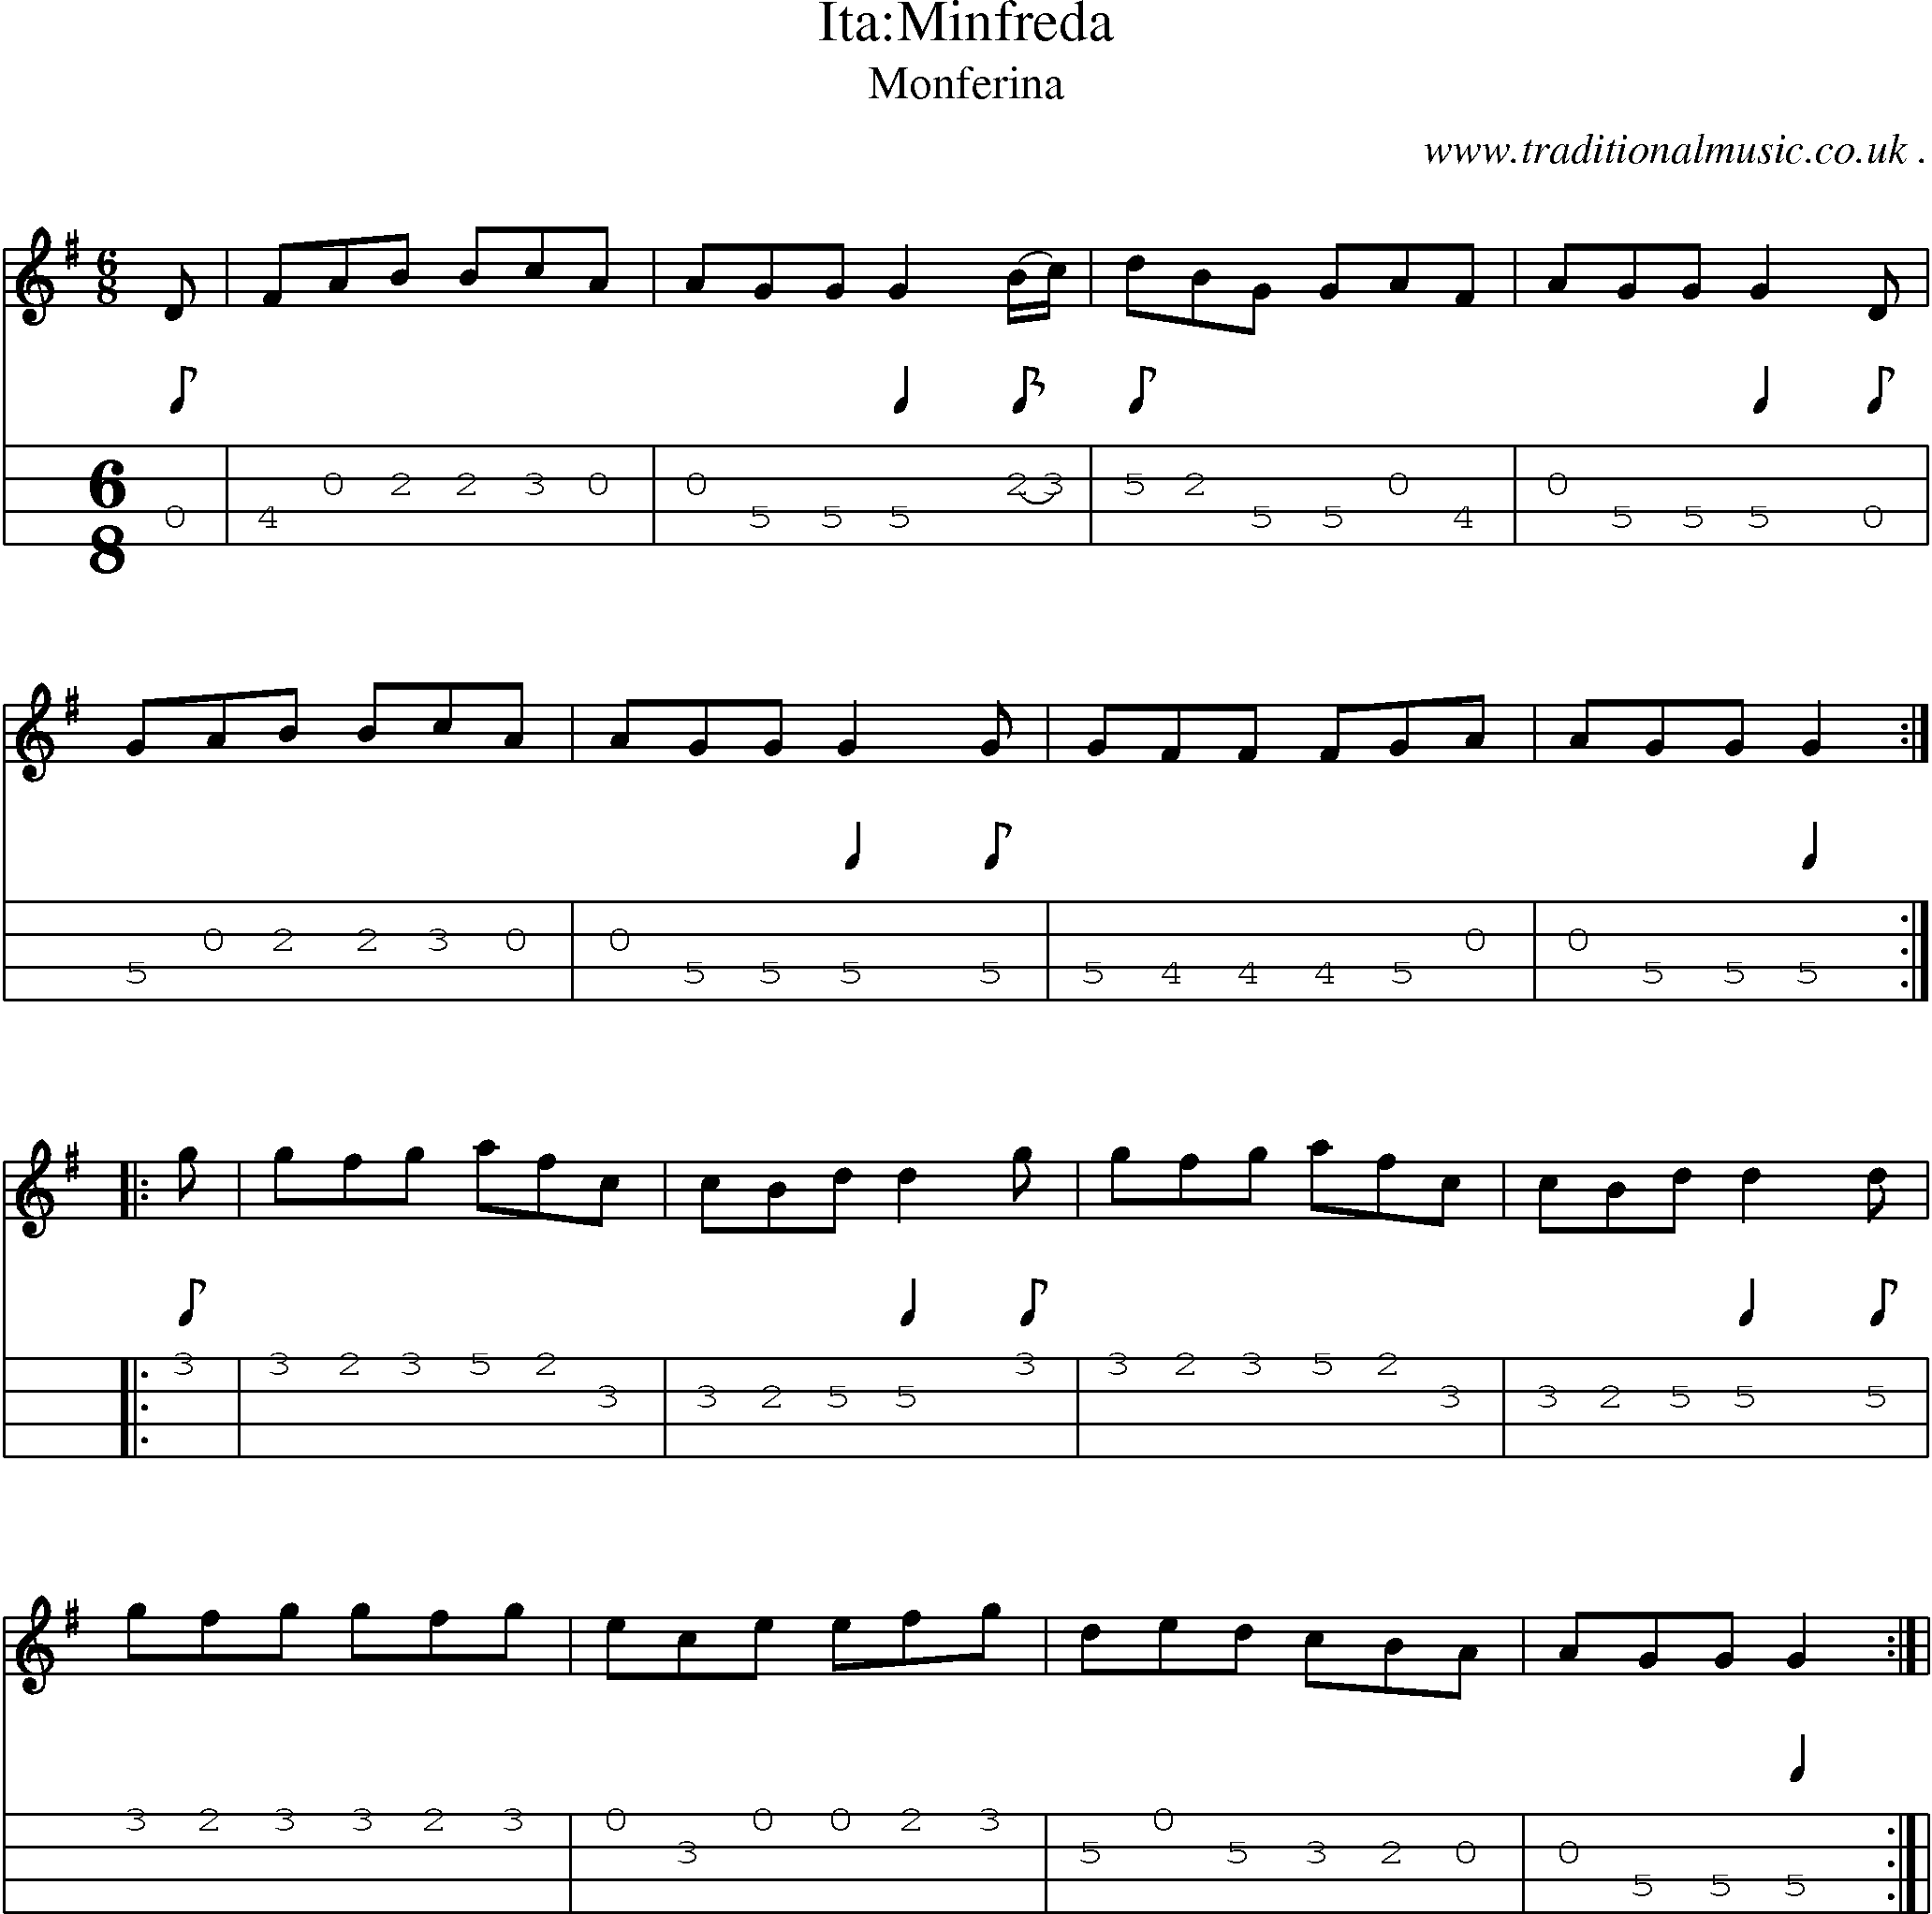 Sheet-Music and Mandolin Tabs for Itaminfreda